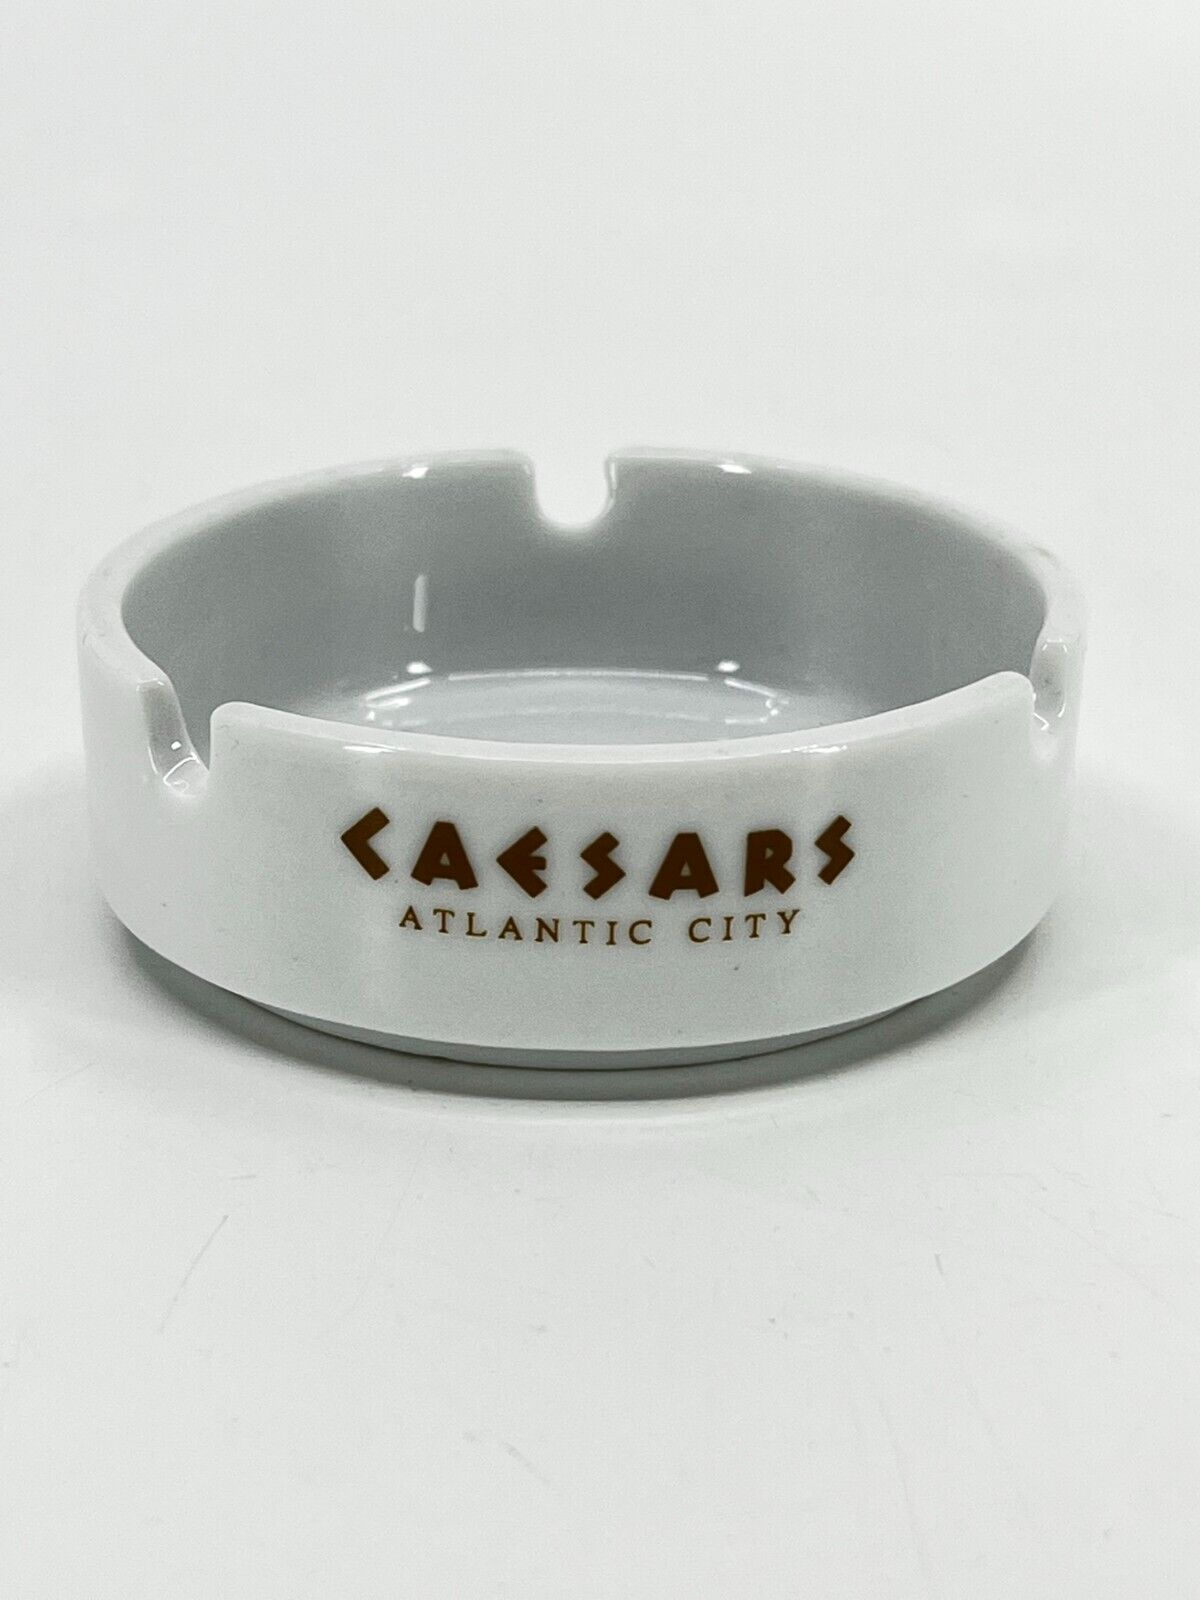 Vintage Caesars Atlantic City Casino Souvenir Ashtray - White Ceramic MINT